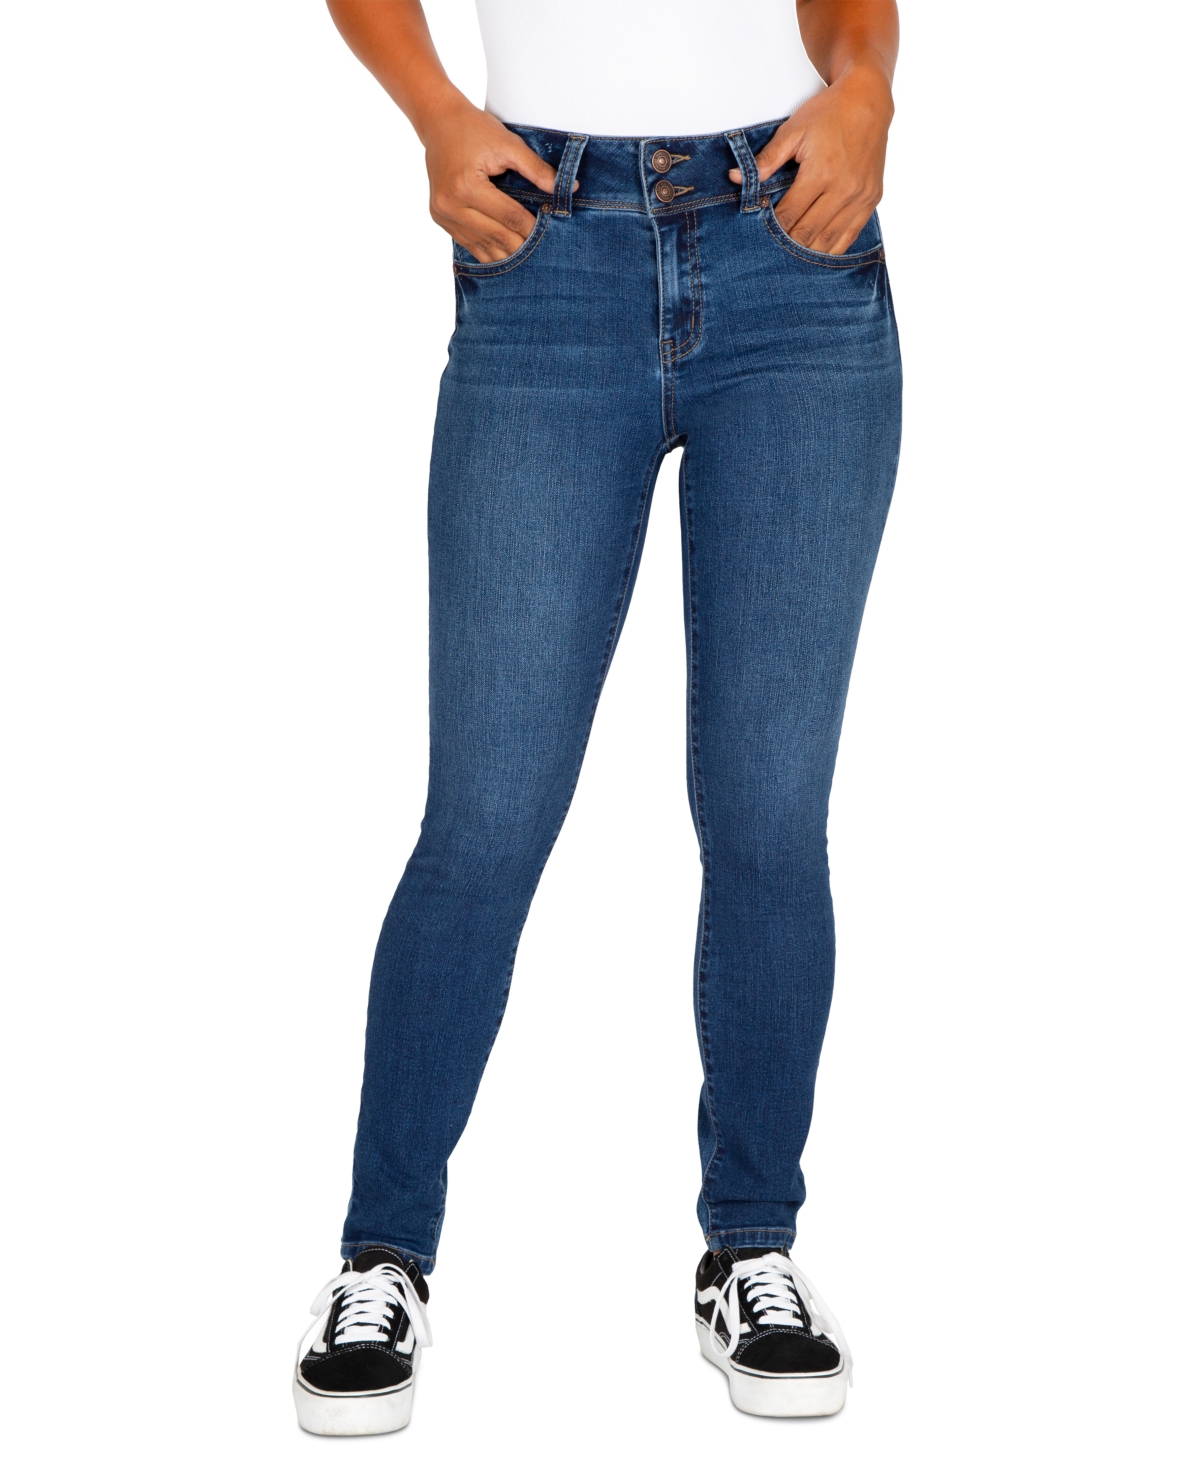 Rewash Juniors' Mid-rise Booty-shaping Skinny Jeans In Indigo Vintage